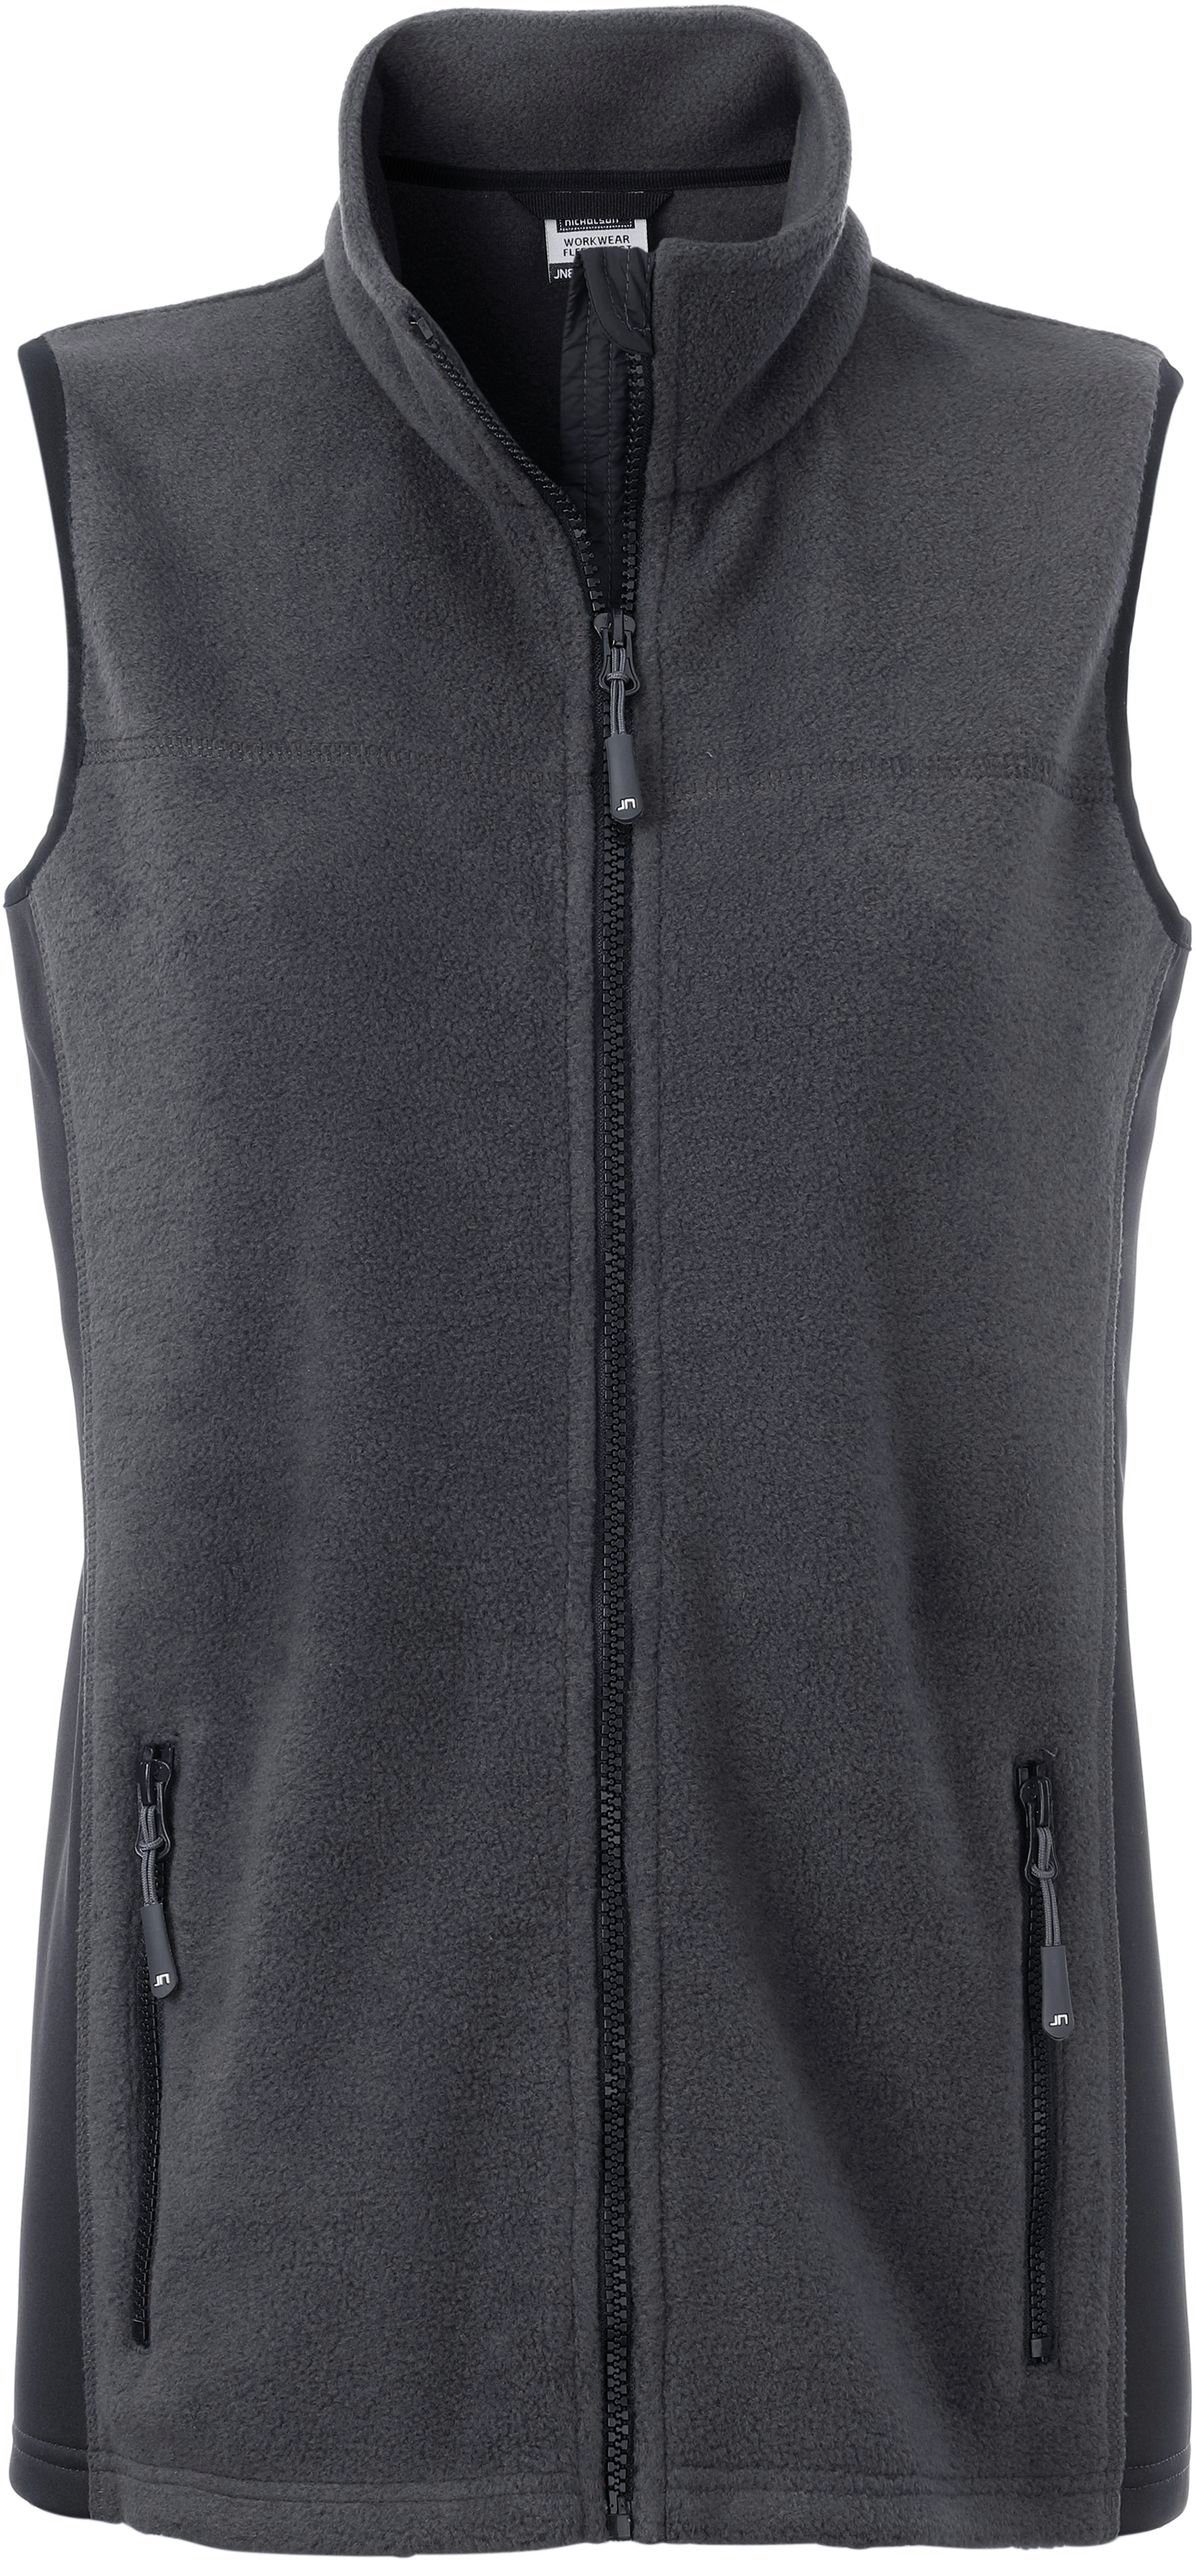 James & Nicholson Fleeceweste Workwear Gilet carbon/black Fleece Weste FaS50855